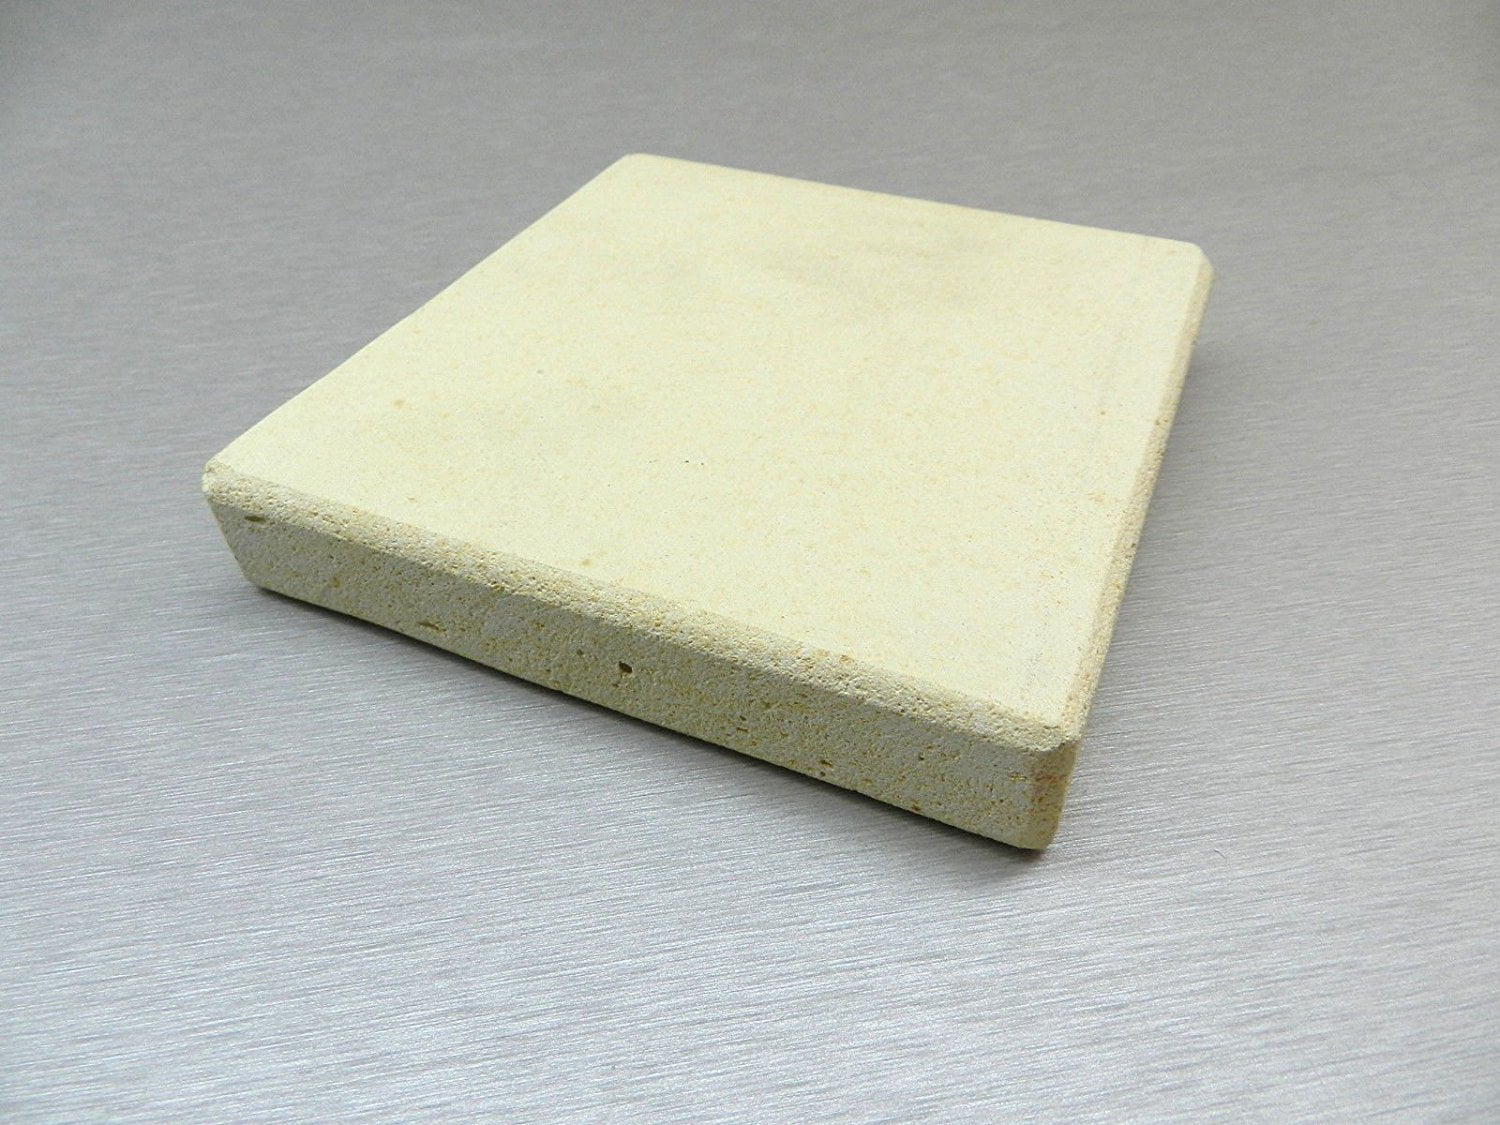 135mmx 95mmx13mm Soldering Board Ceramic for Honeycomb Solder Block Heating 